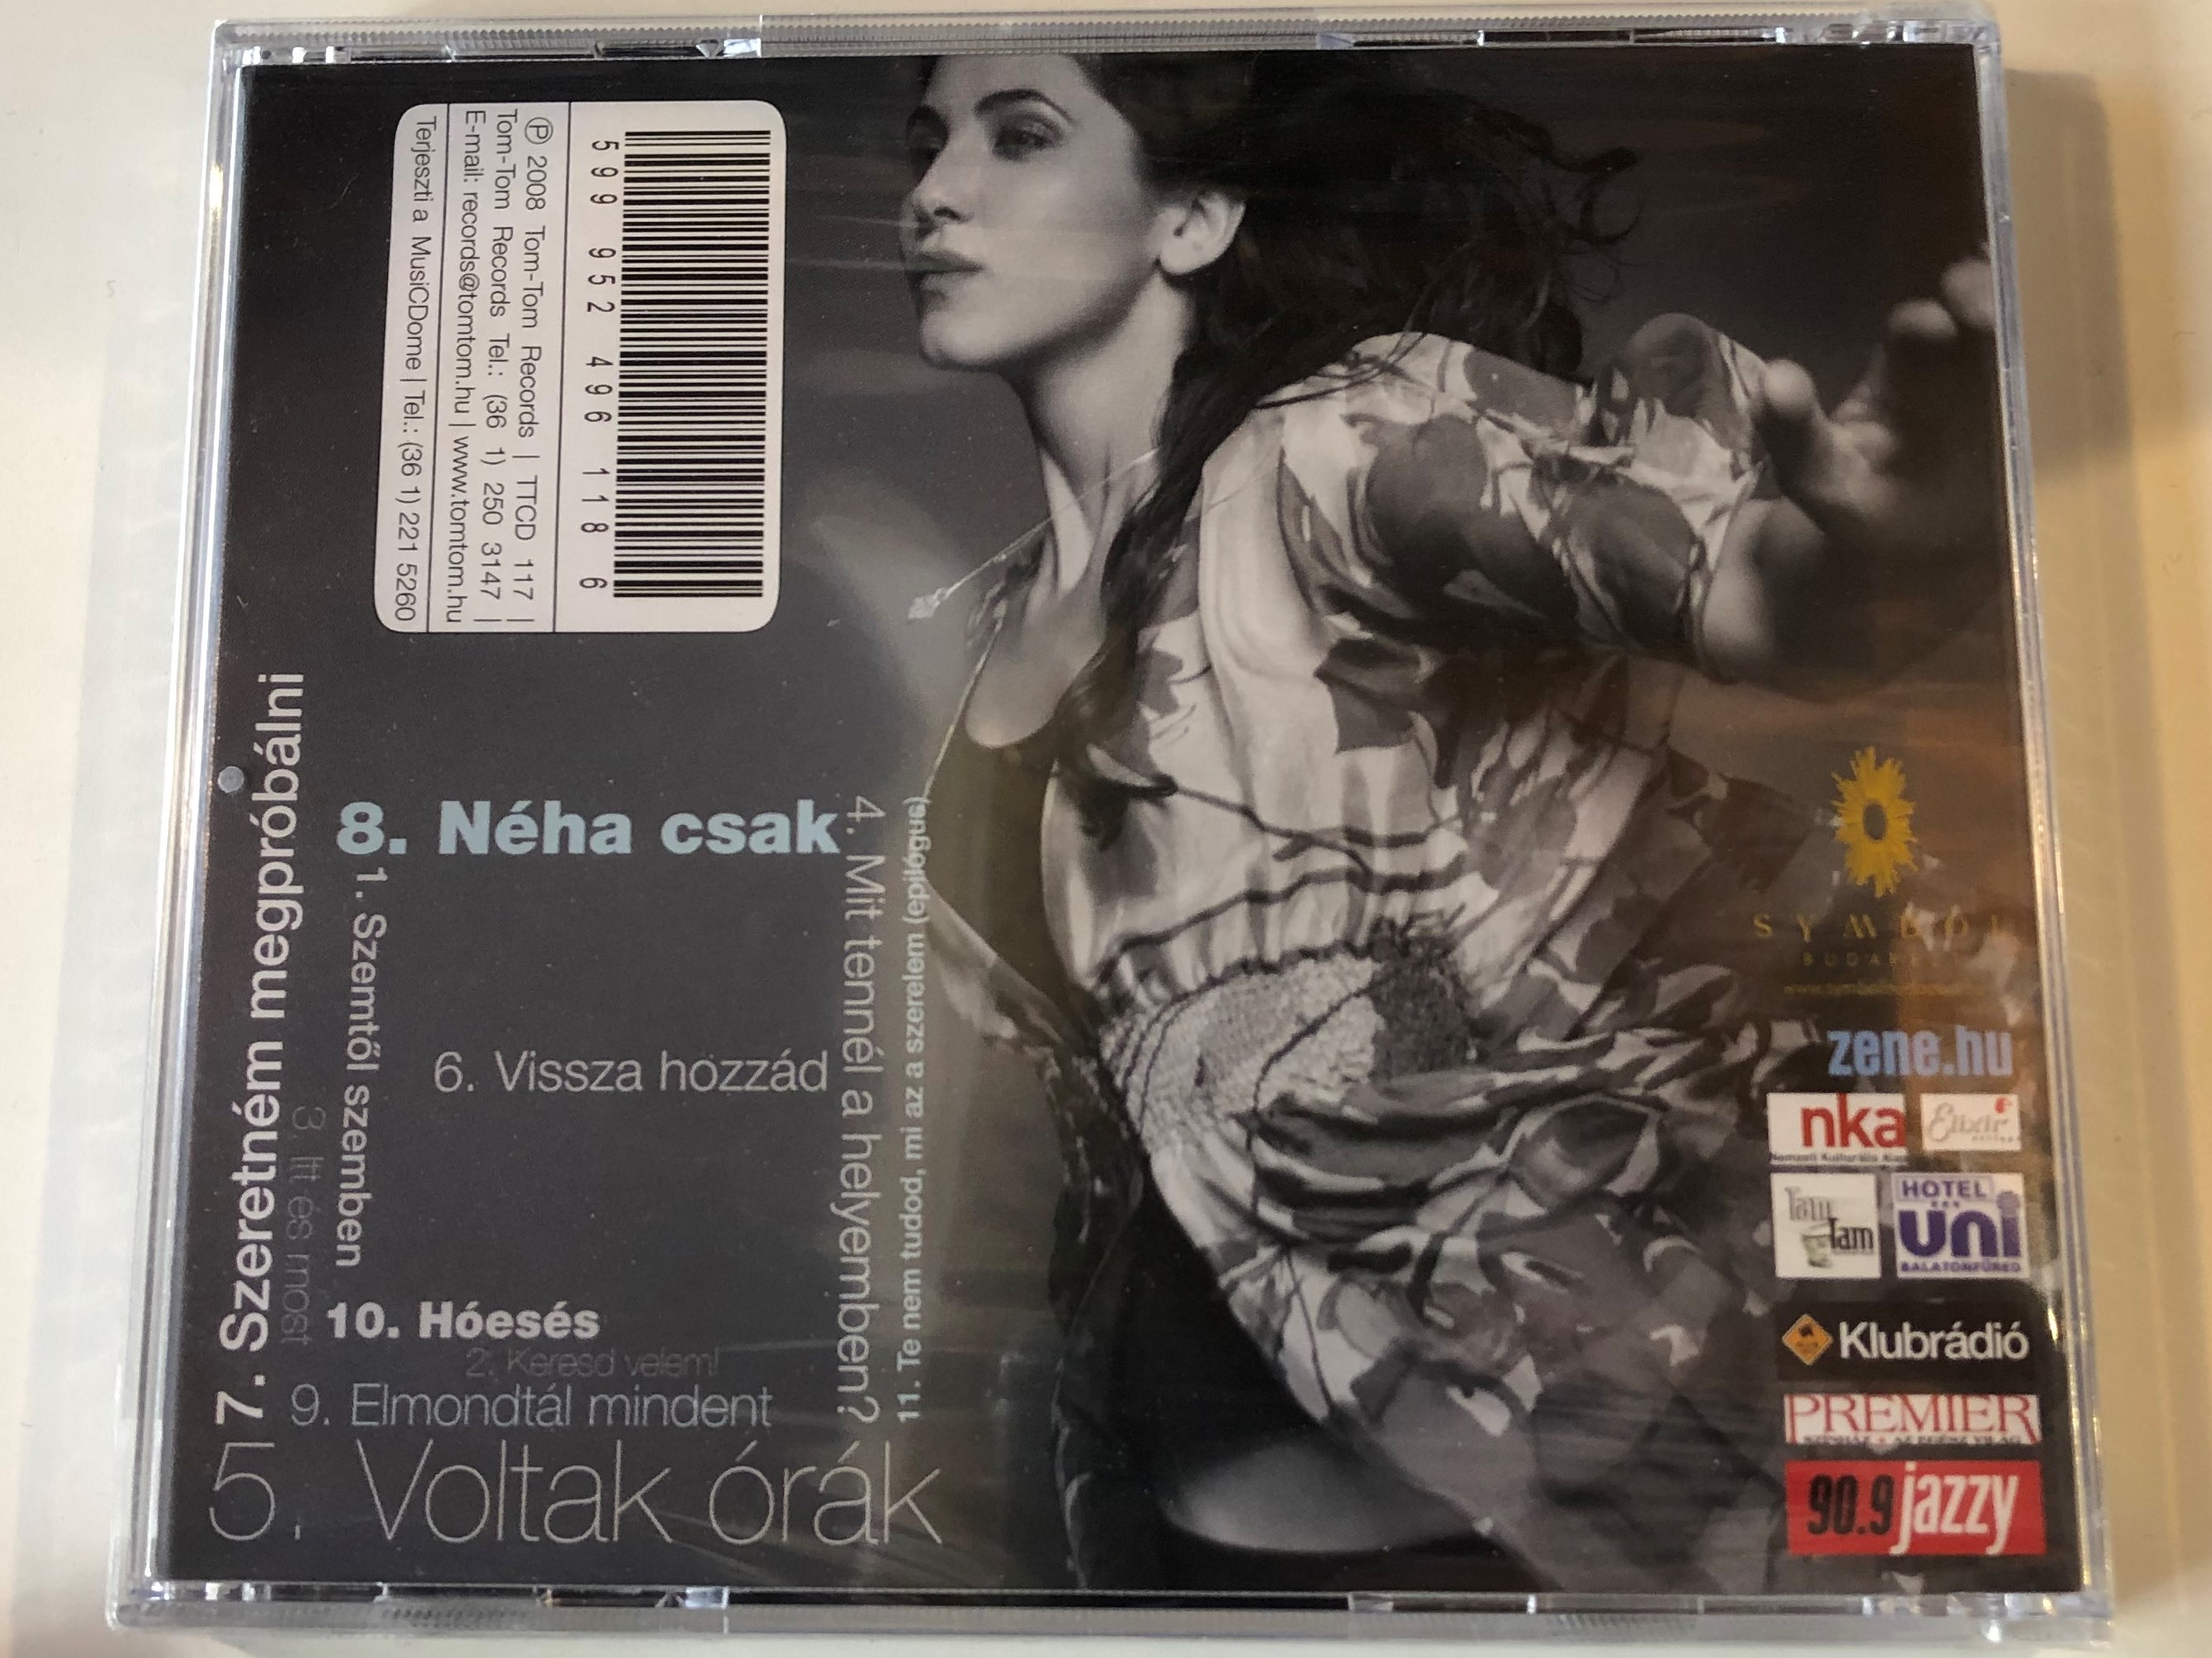 v-czi-eszter-quartet-vissza-hozz-d-tom-tom-records-audio-cd-2008-ttcd-117-2-.jpg